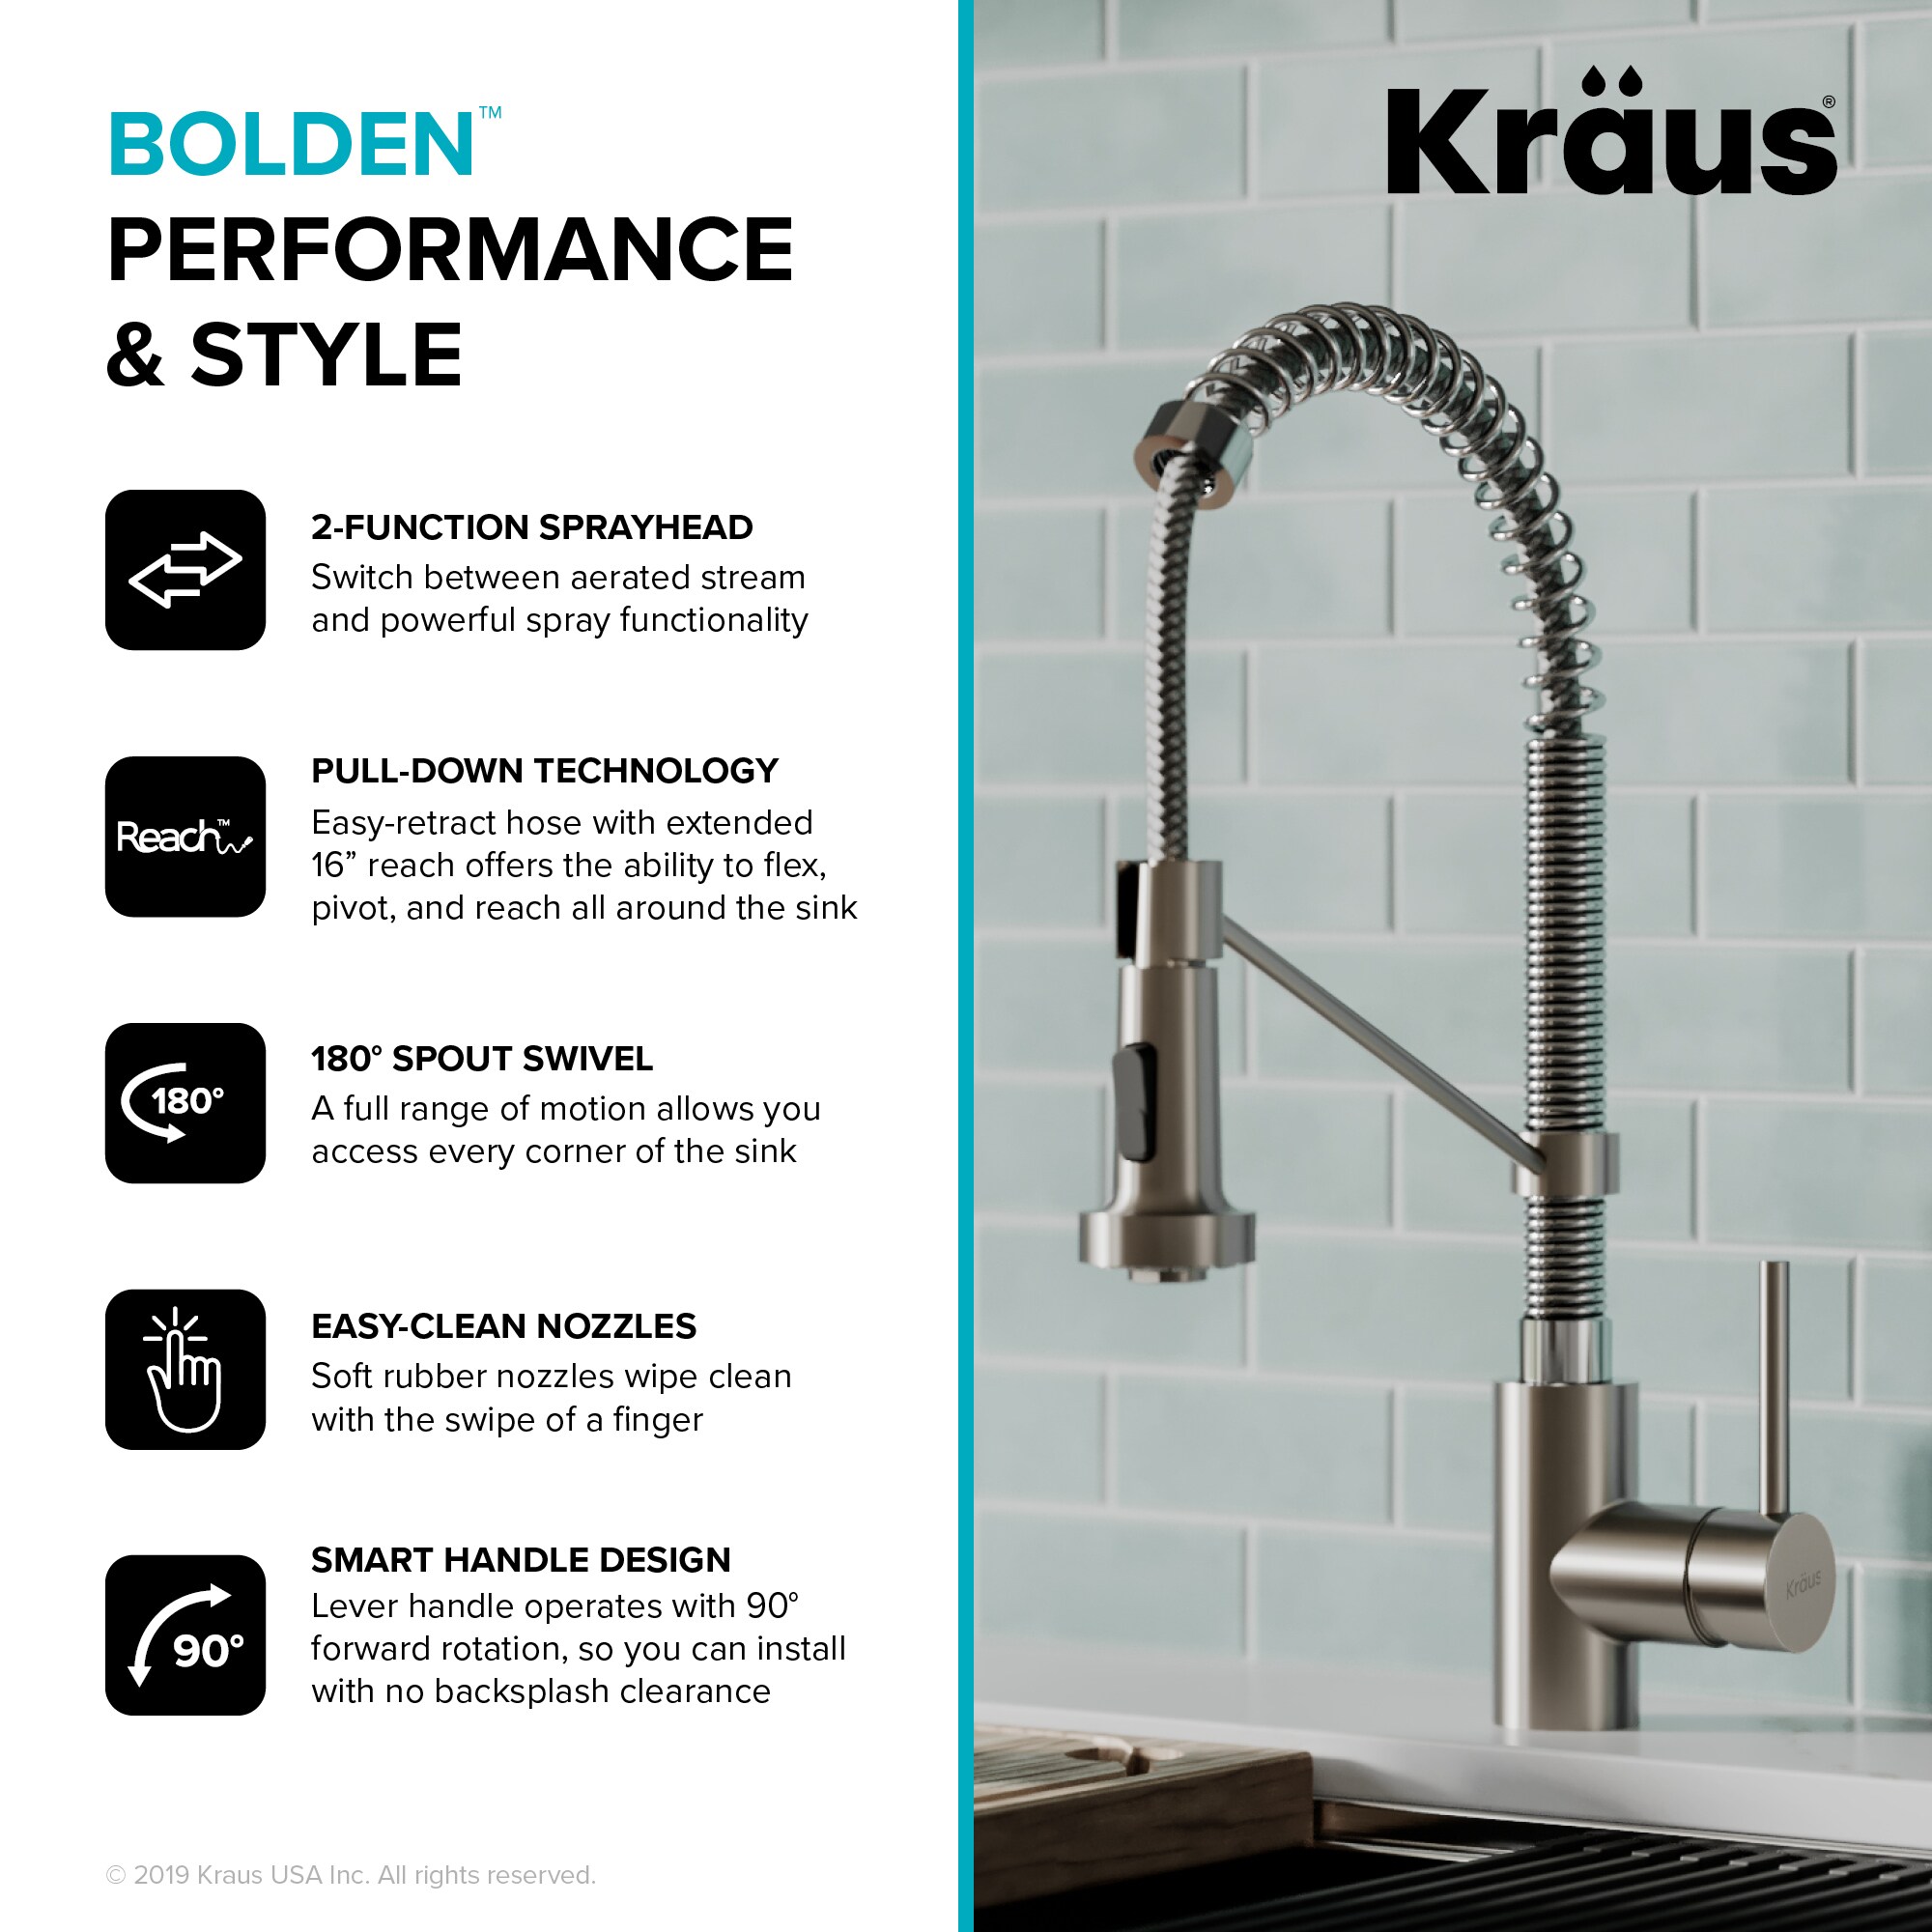 Stainless Kraus KPF-1610 Bolden 1.8 GPM 18" Pull-Down Spray Kitchen Faucet 